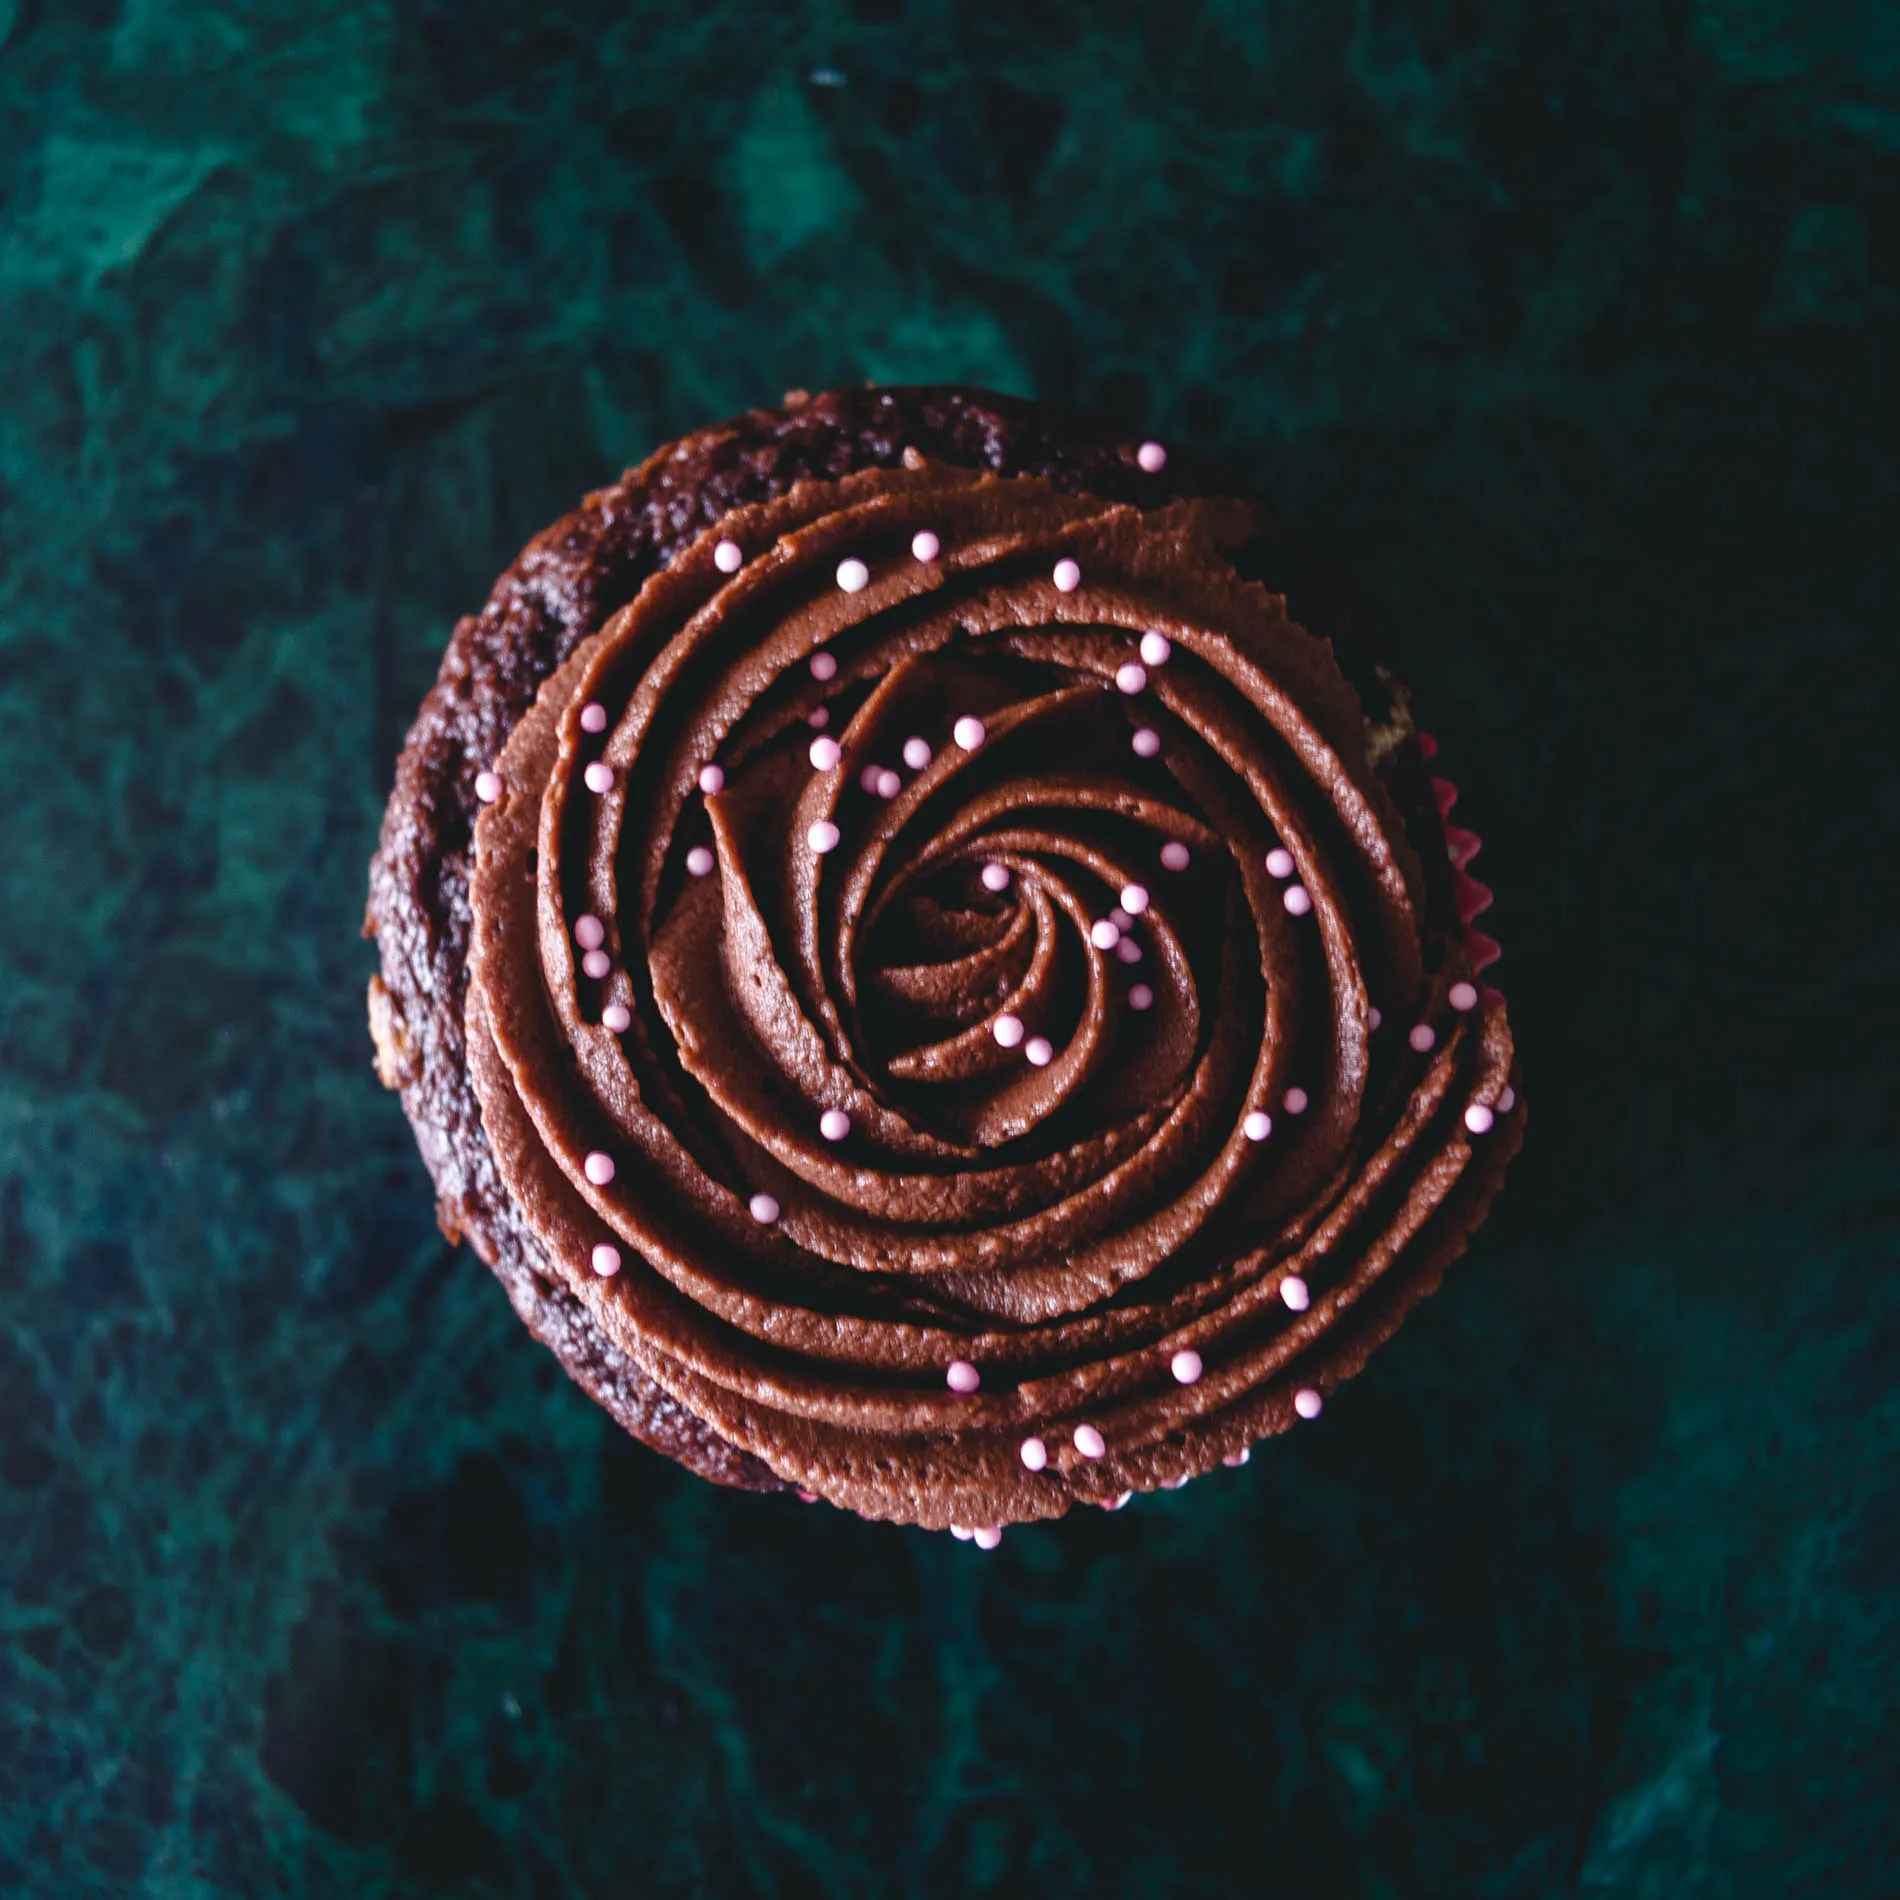 chocolate cupcake with chocolate ganache